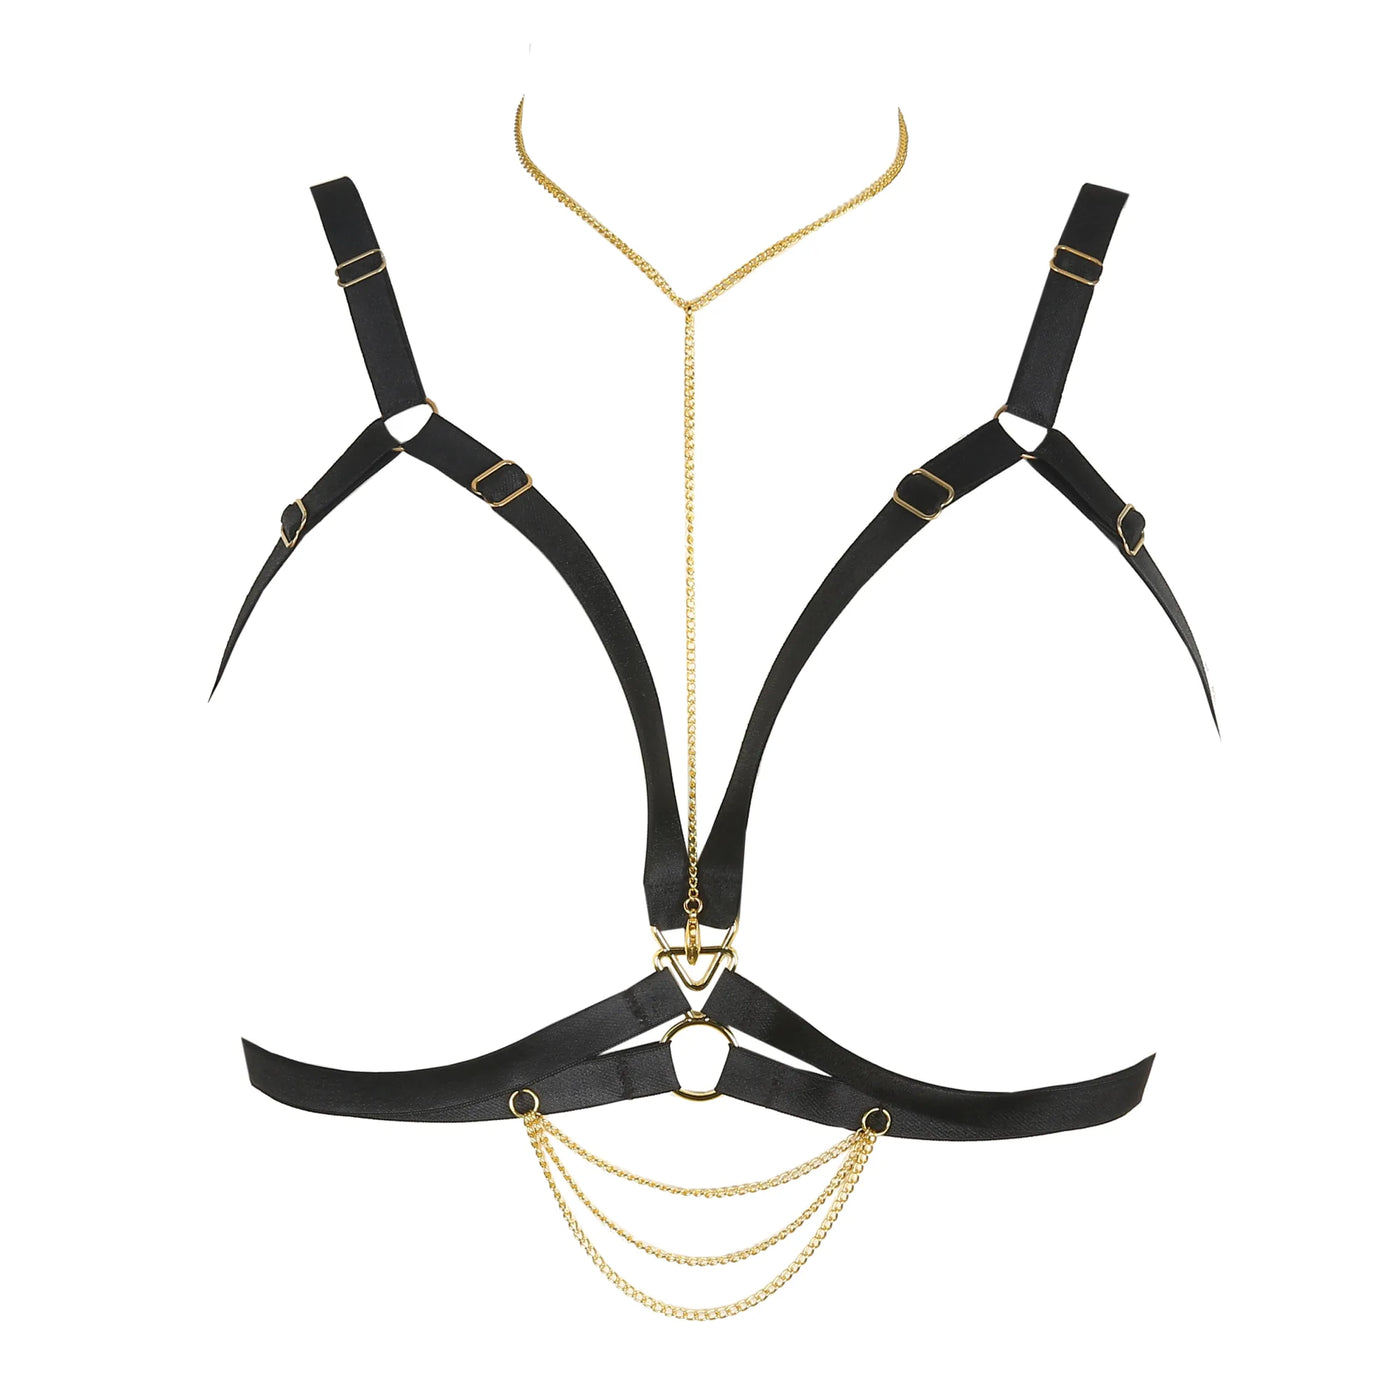 Primadonna Cheyney special accessory harness